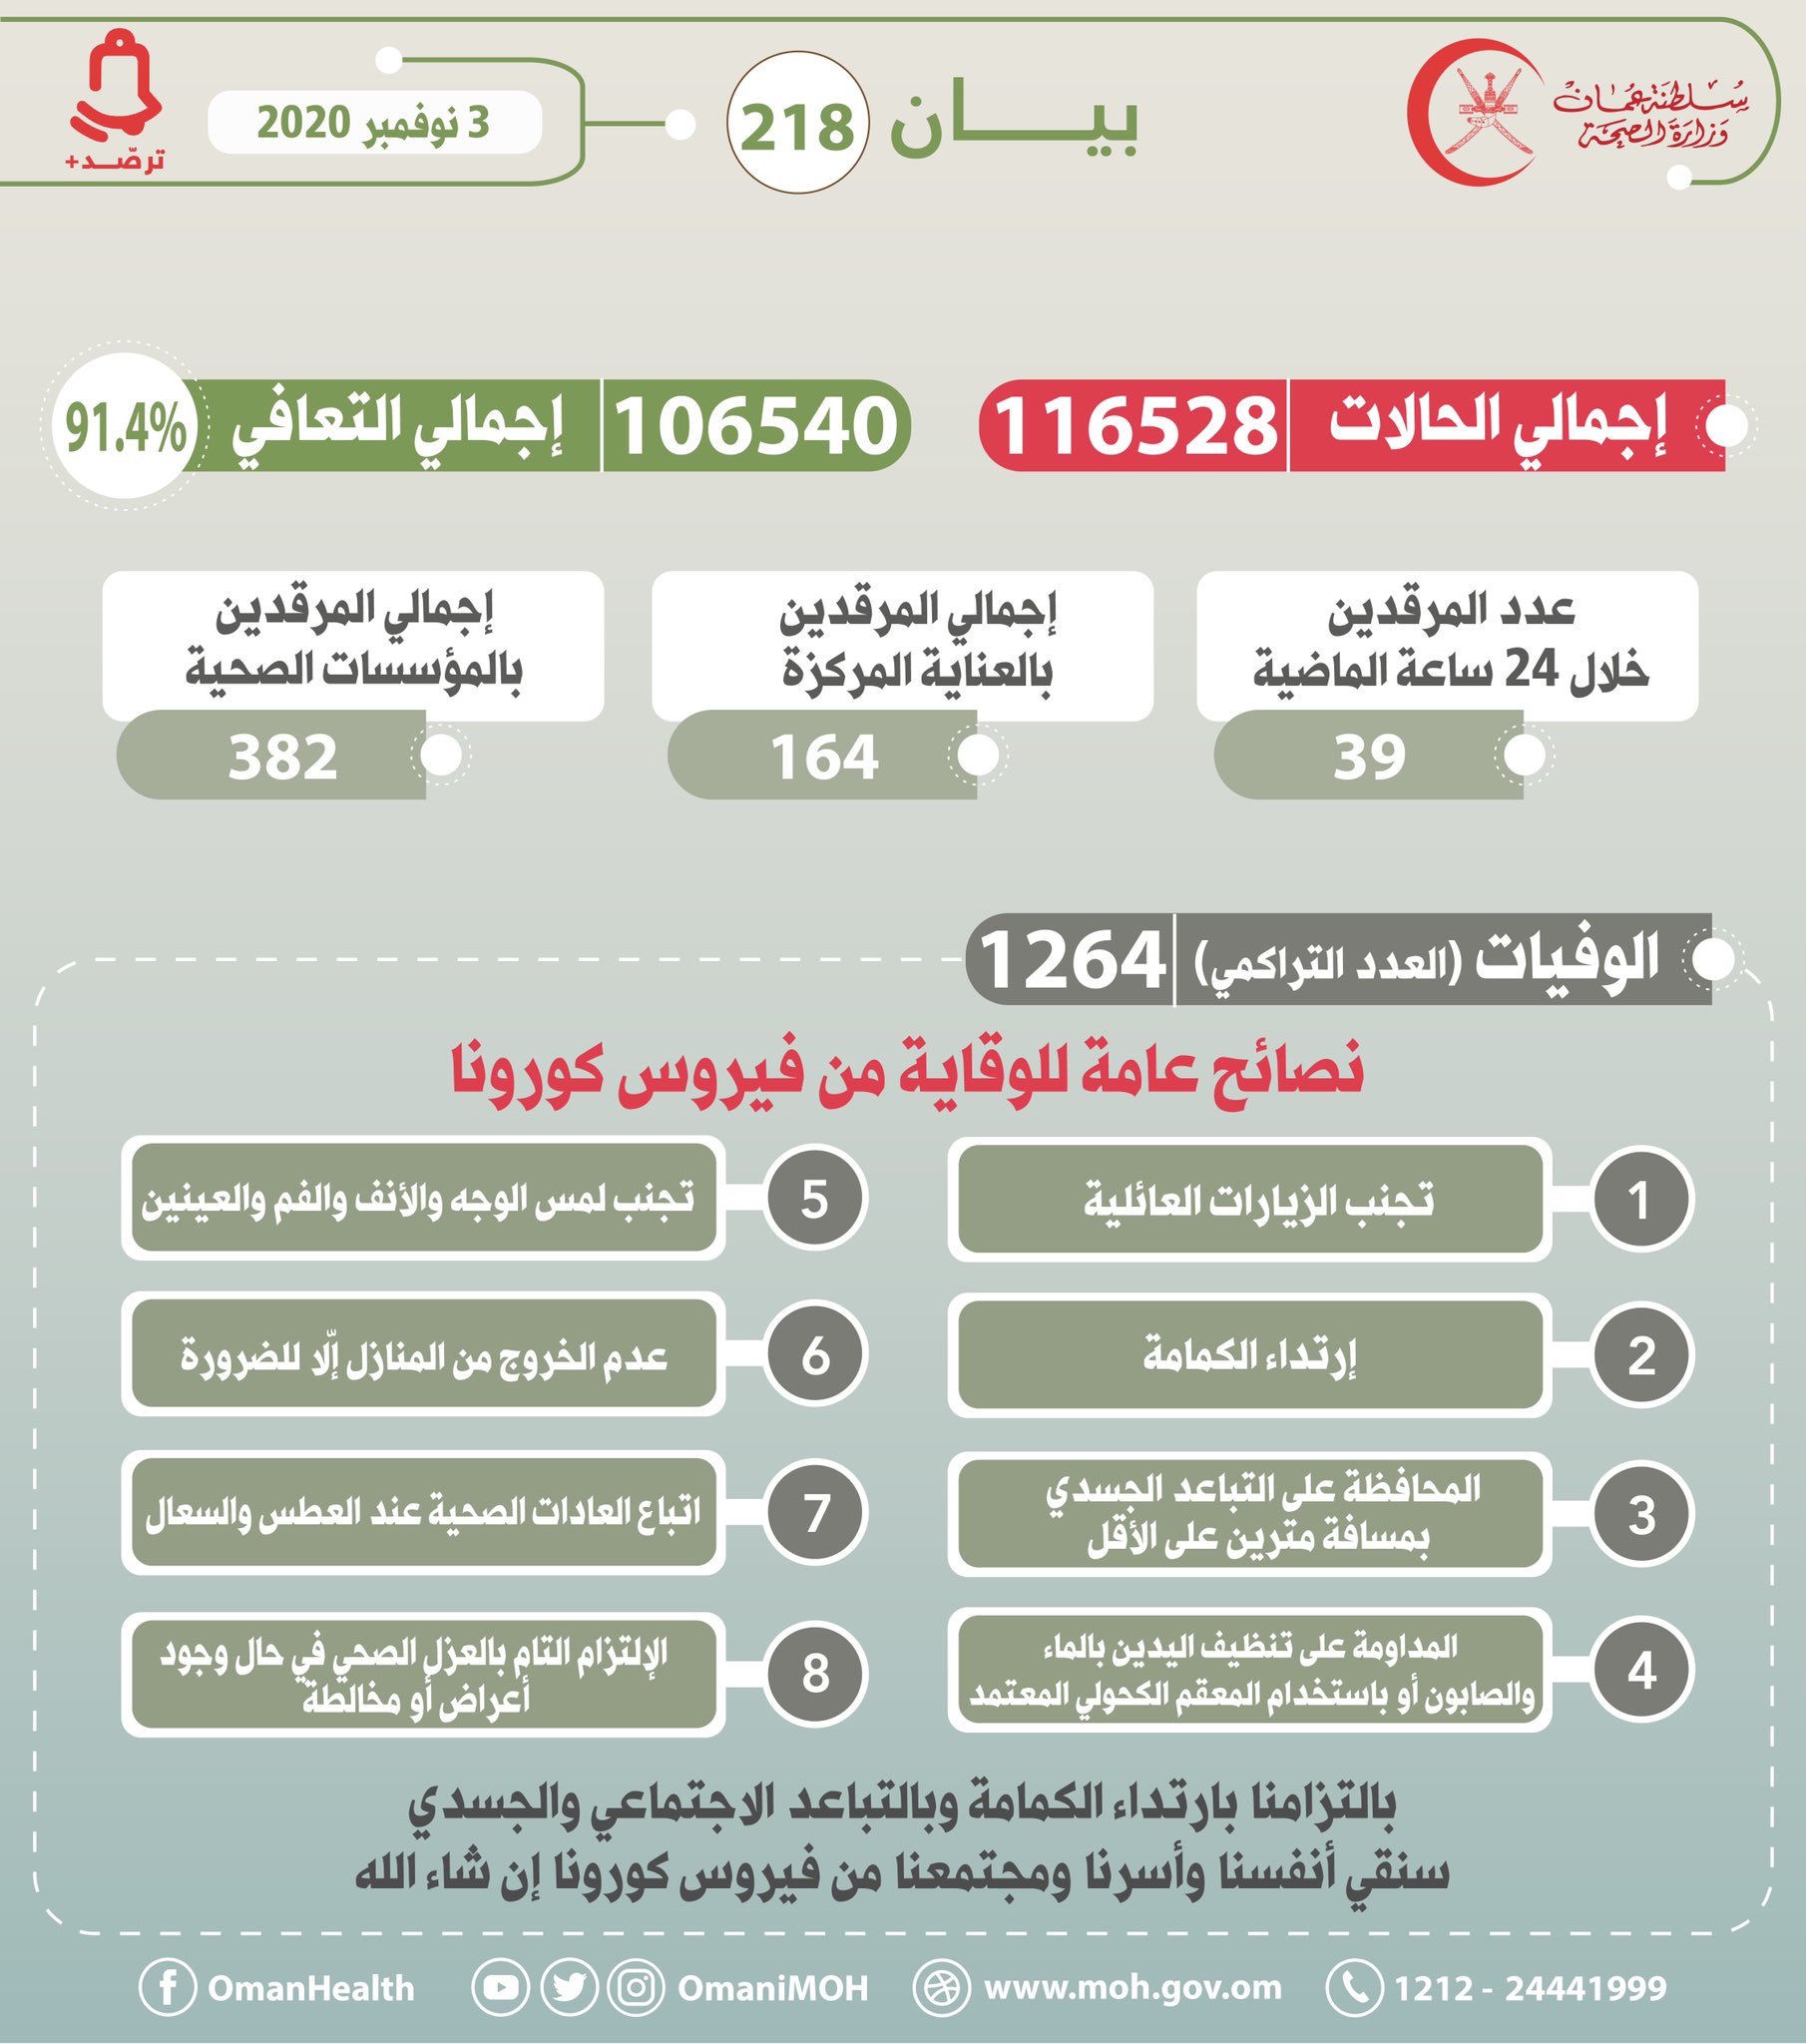 بيان رقم 218
3 نوفمبر 2020م

‫#عمان_تواجه_كورونا‬